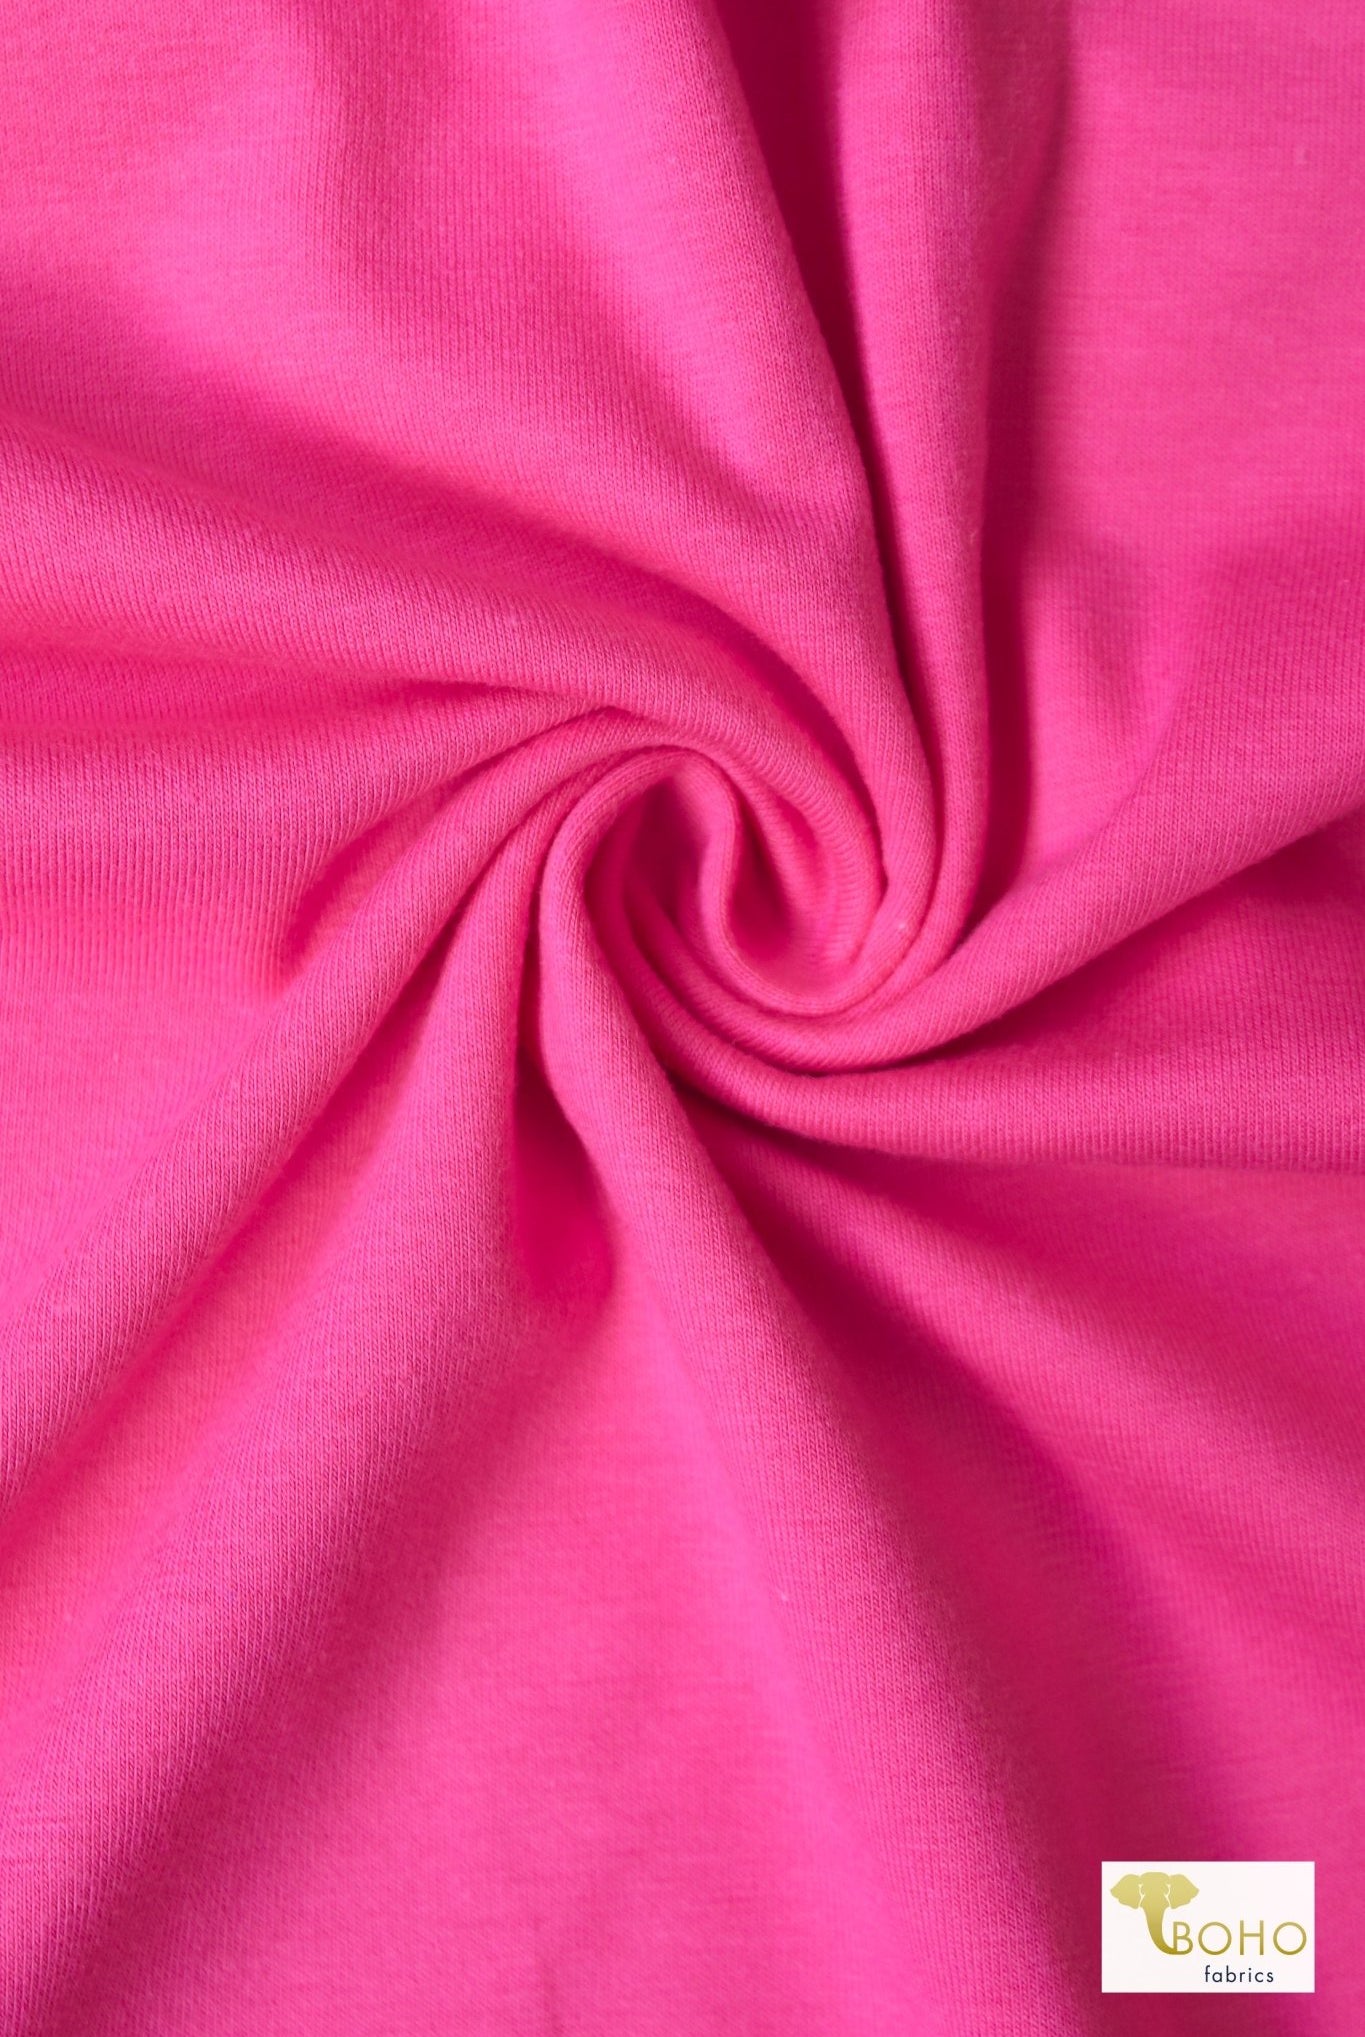 Bubblegum Pink, Solid Cotton Spandex Knit Fabric, 7 oz. - Boho Fabrics